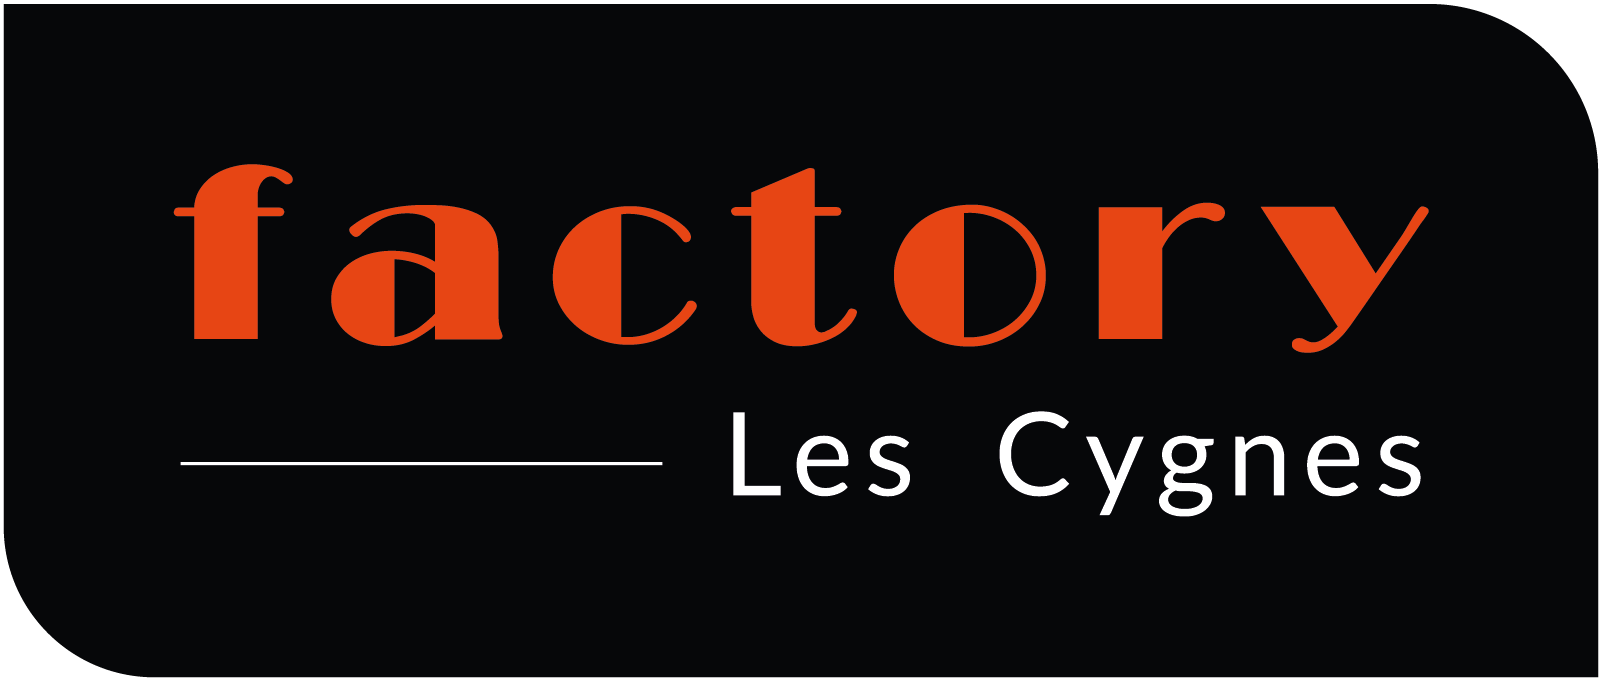 Factory Les Cygnes logo